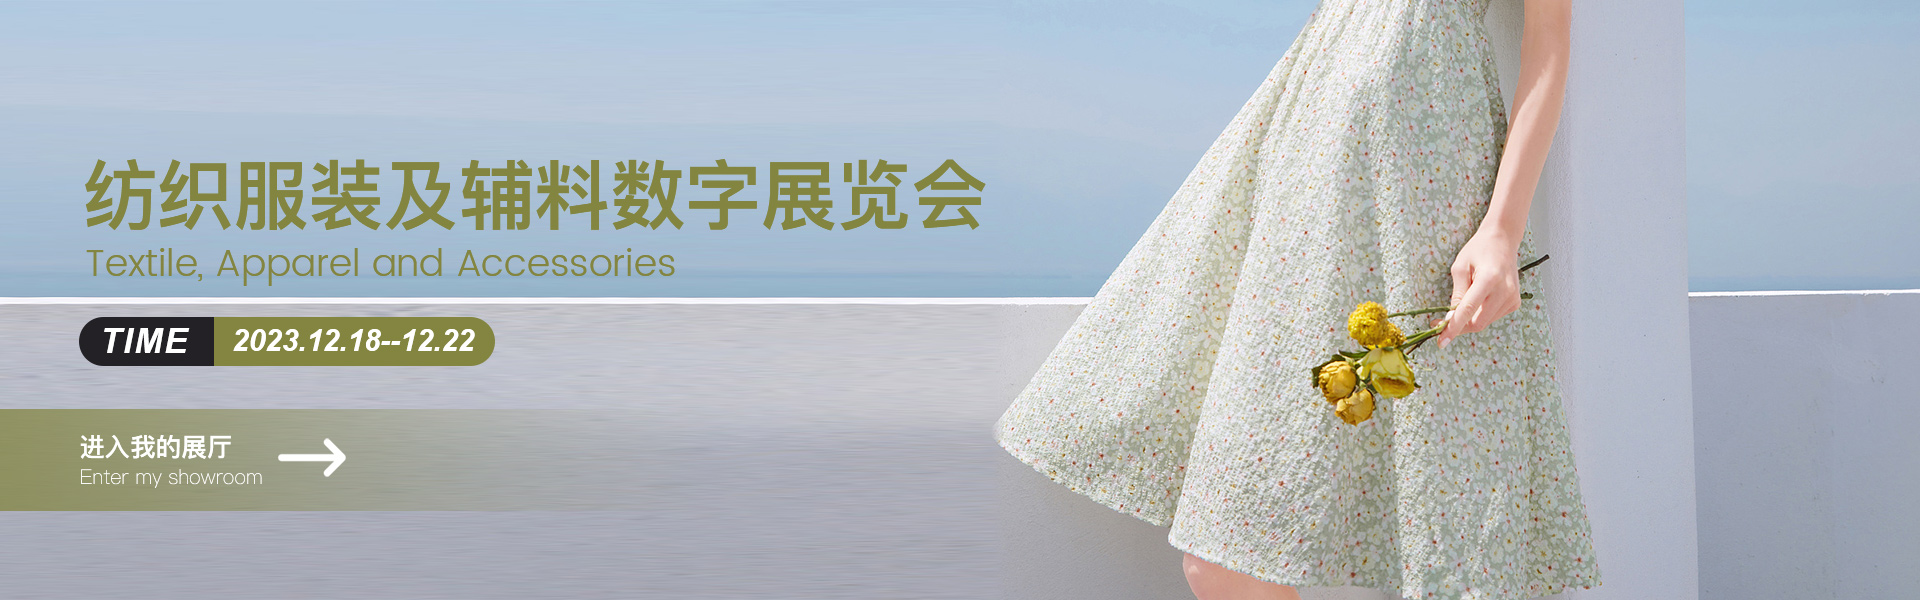 Shaoxing MingFang Textile Co., Ltd